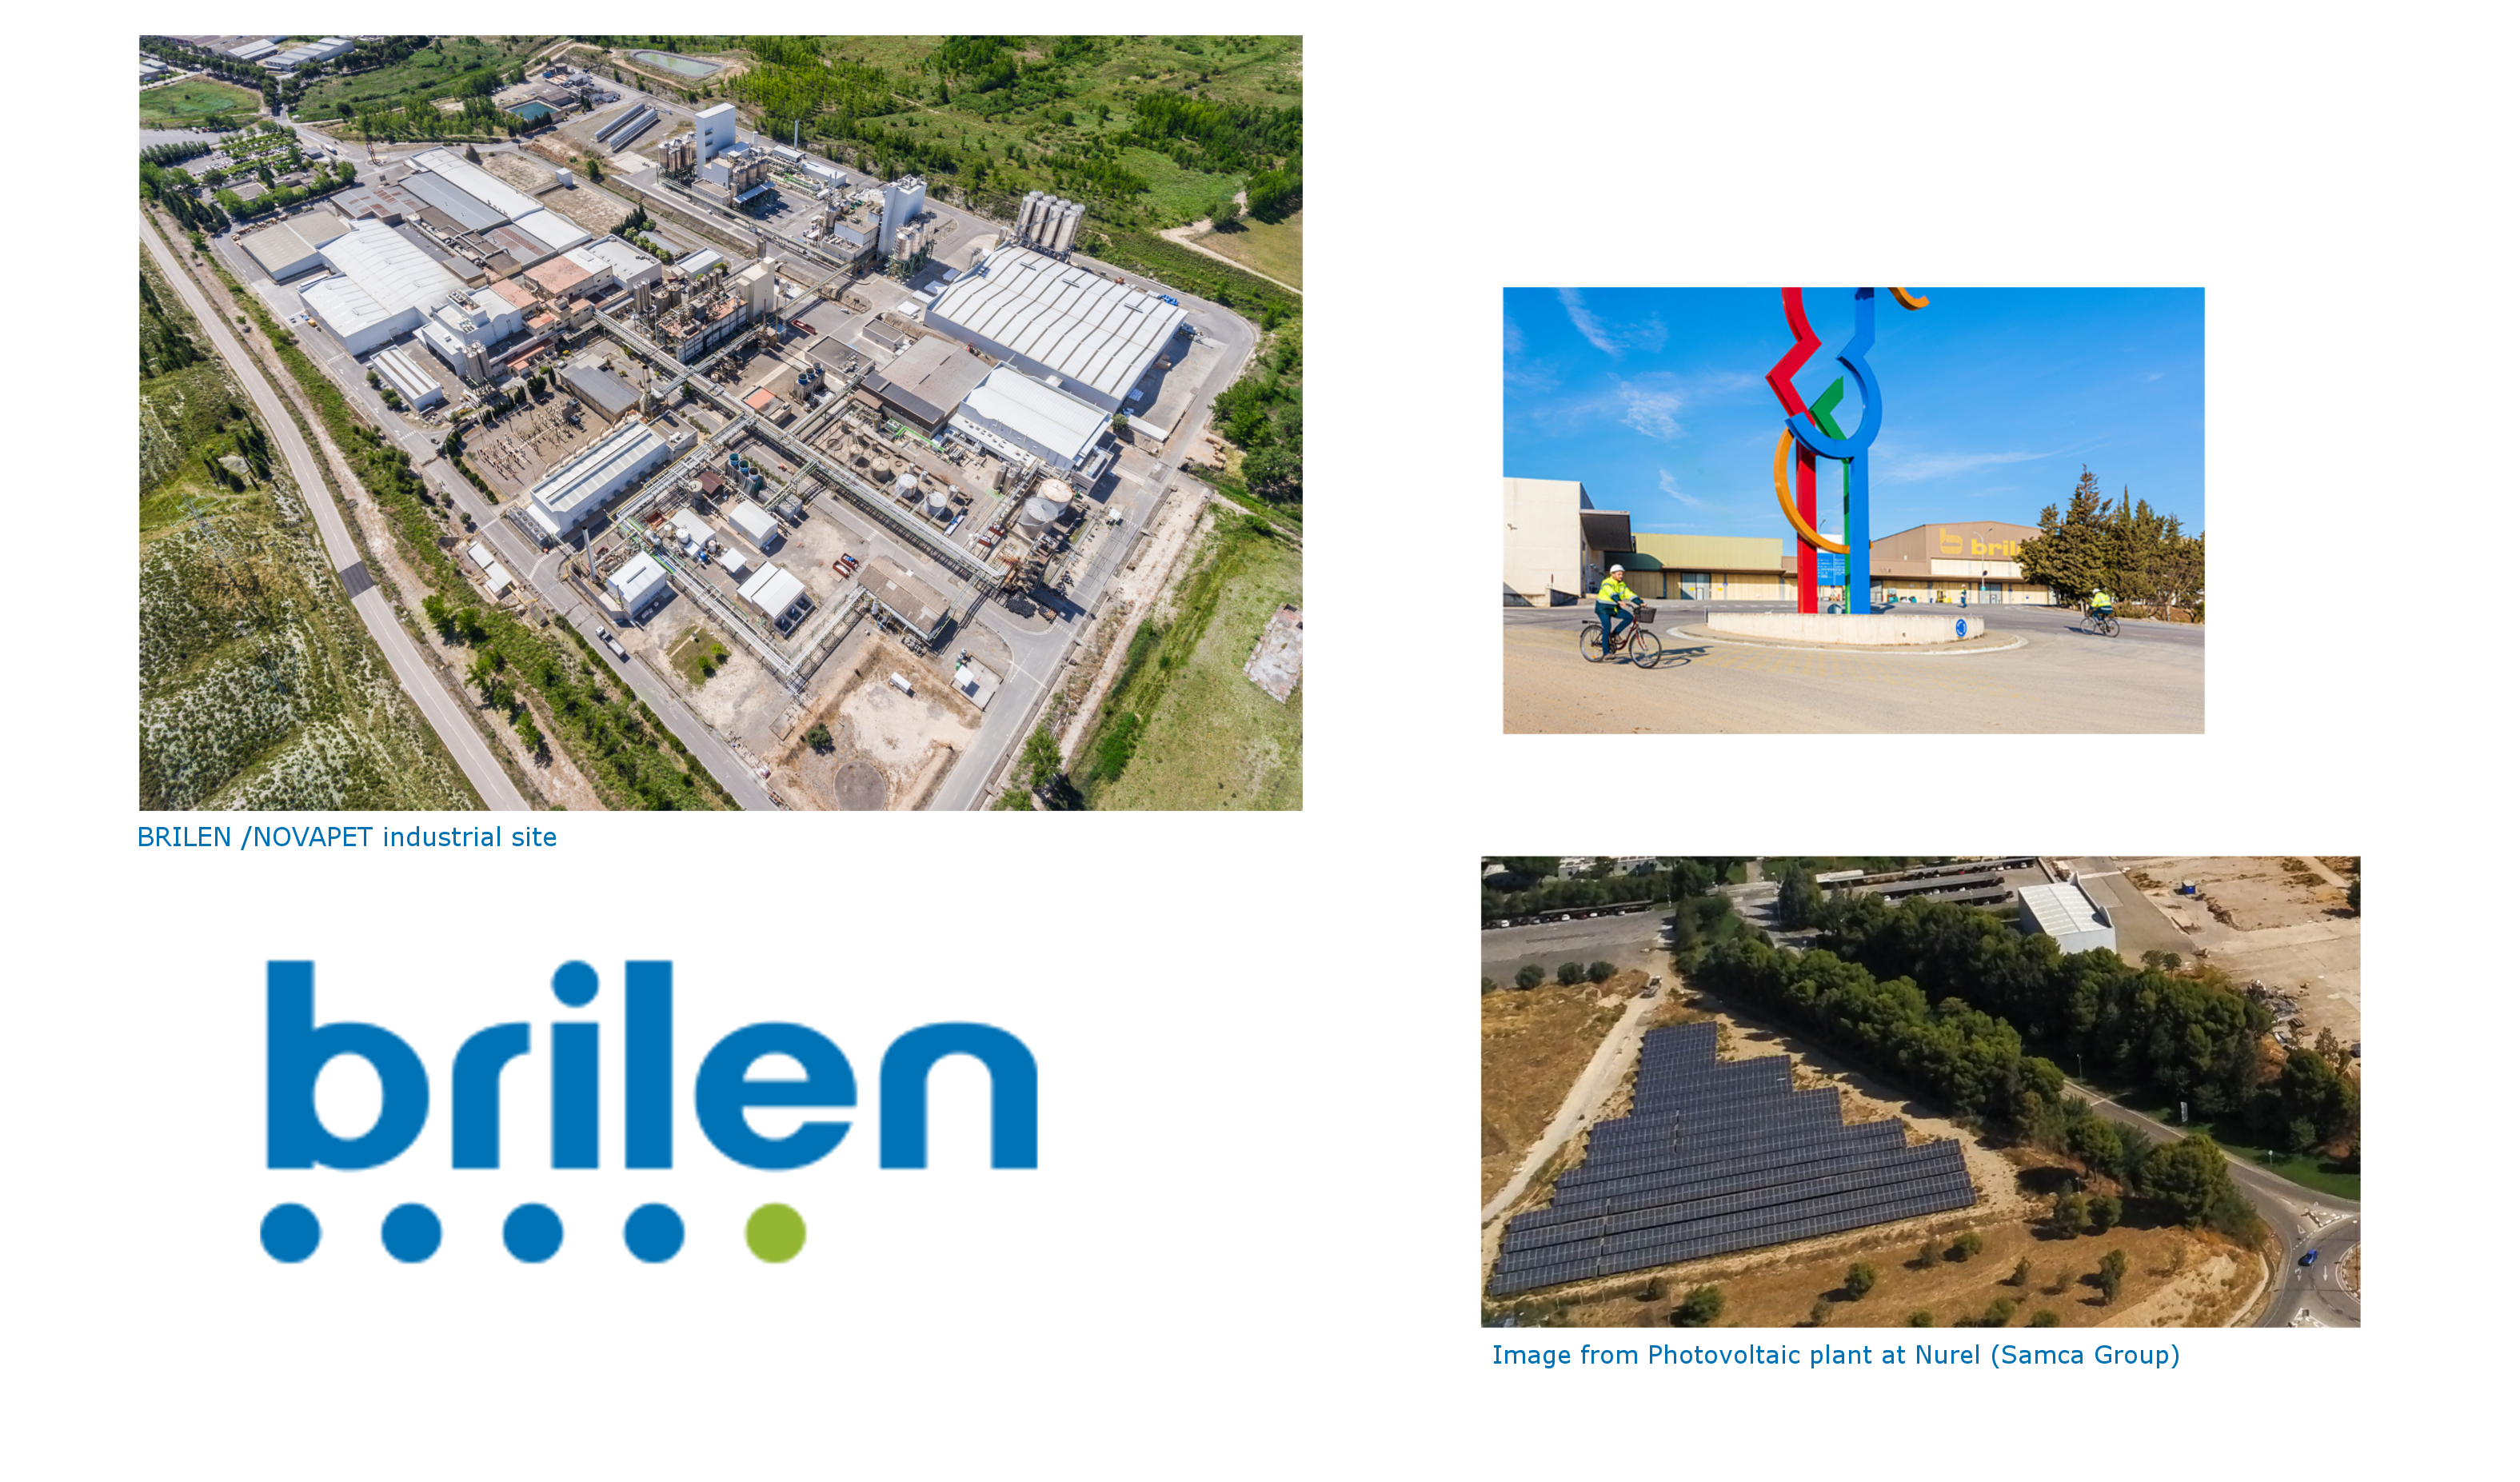 Photovoltaic solar plant at BRILEN